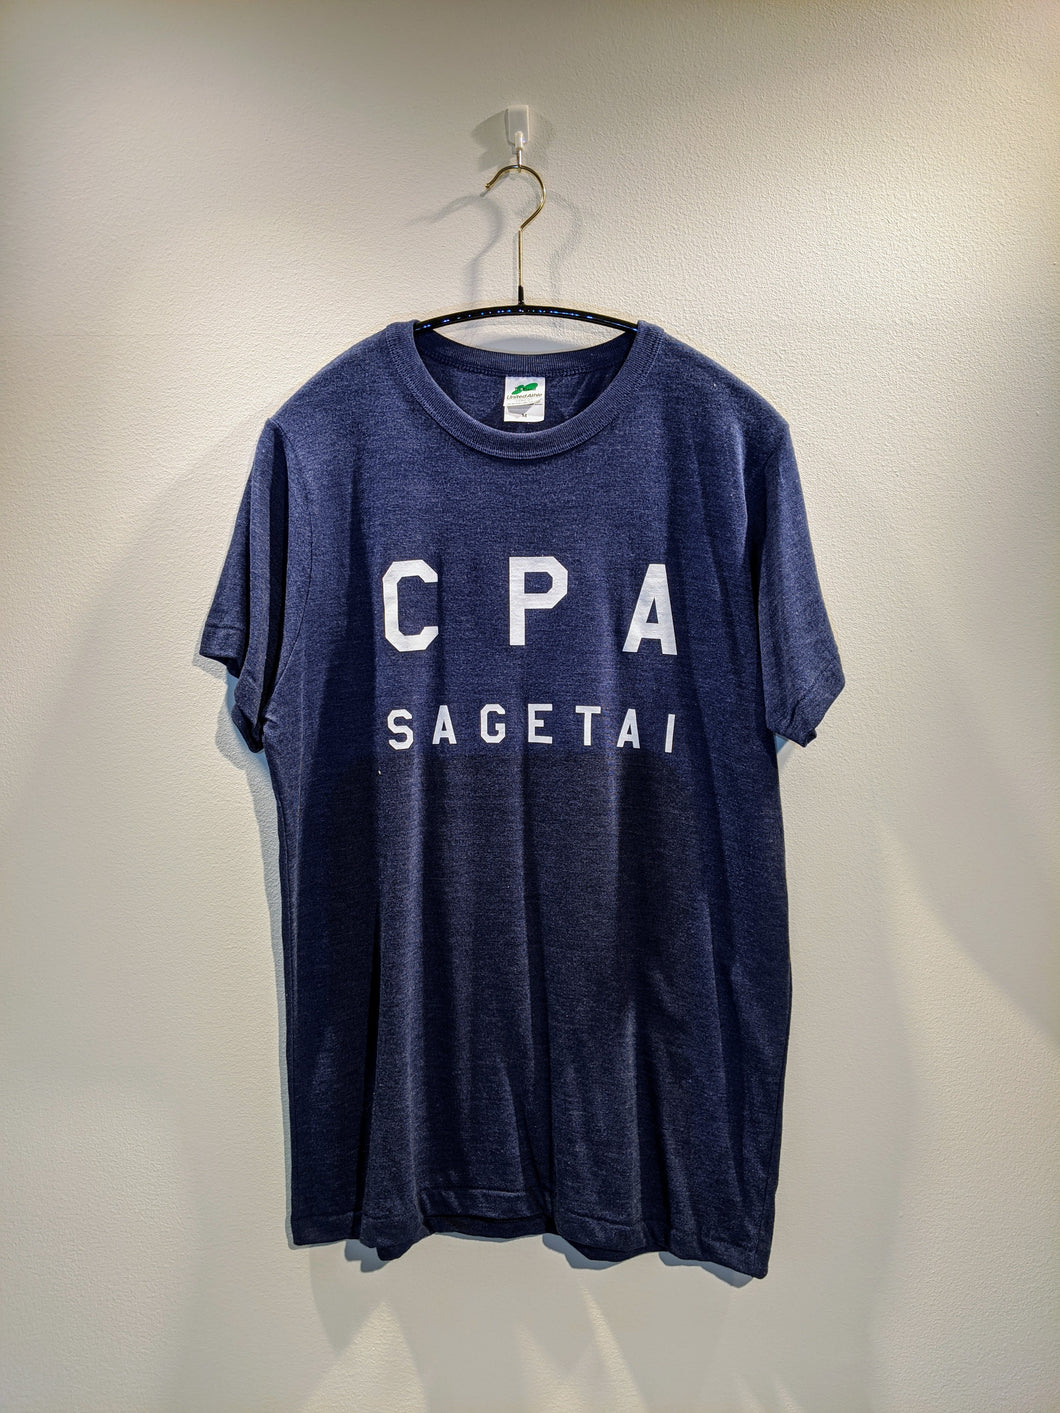 「CPA SAGETAI」 トライブレンドTシャツ【ネイビー地・白プリント】